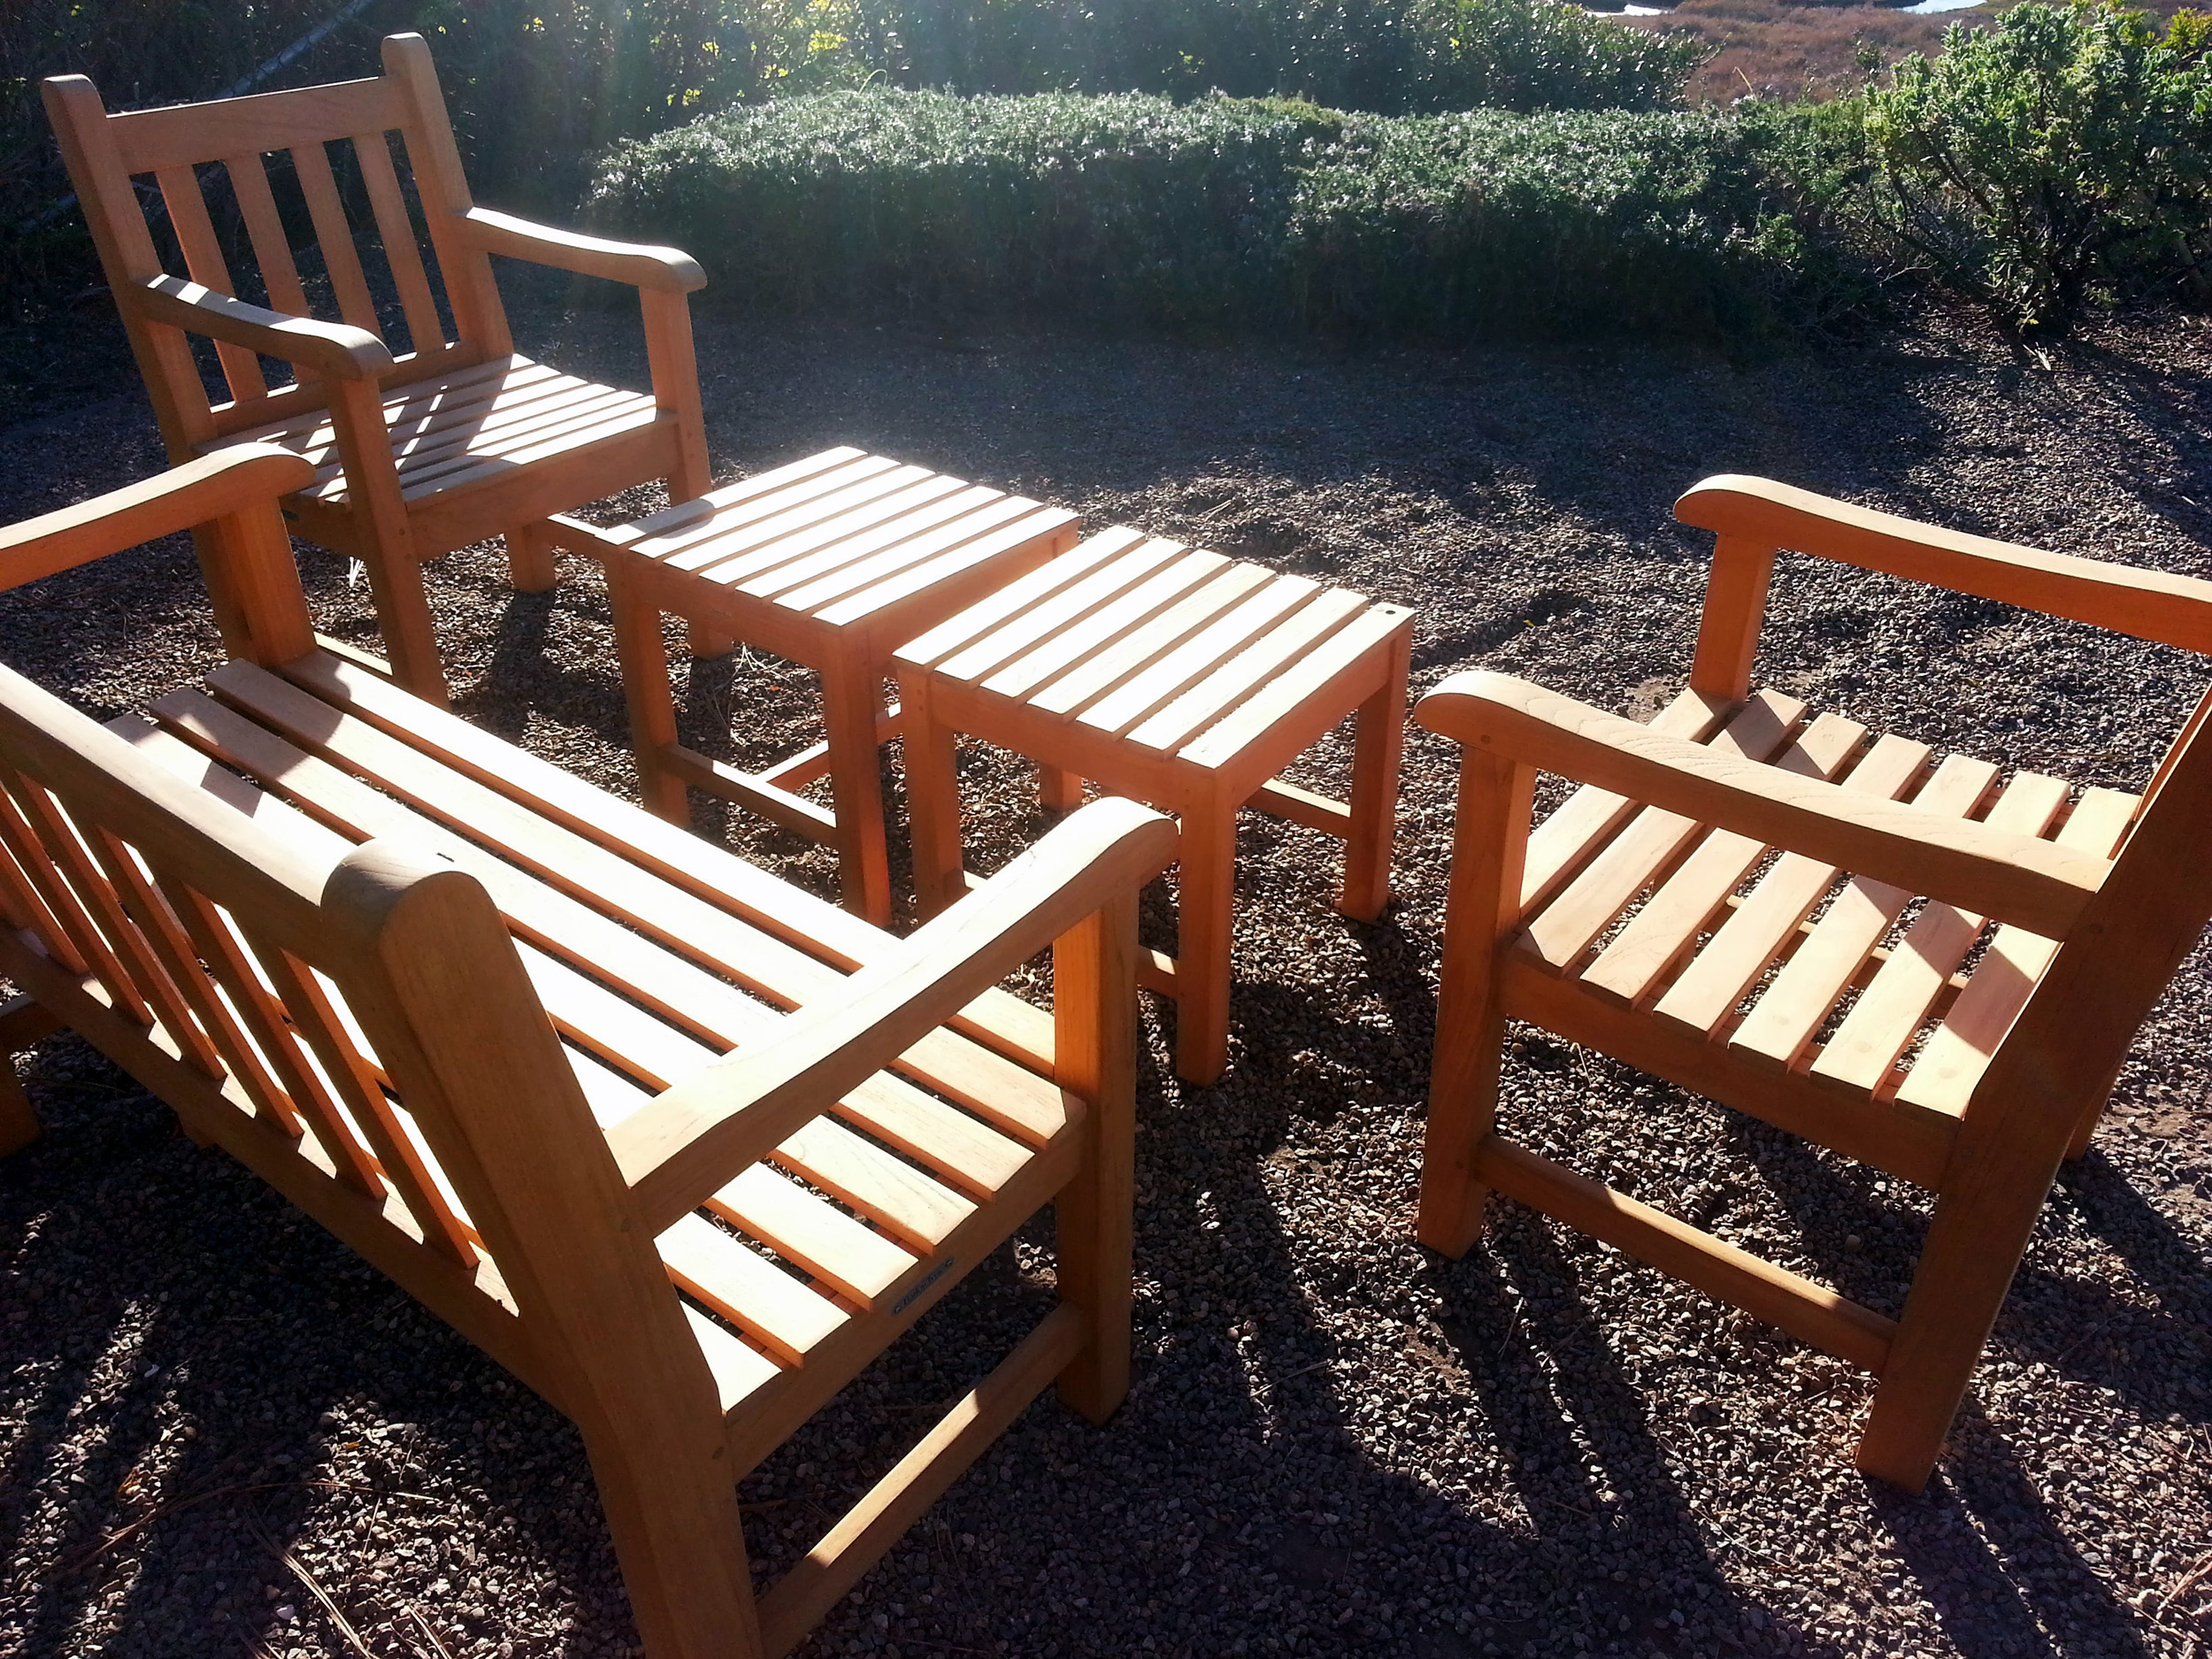 Buena Park teak bench refinished | OC Teak